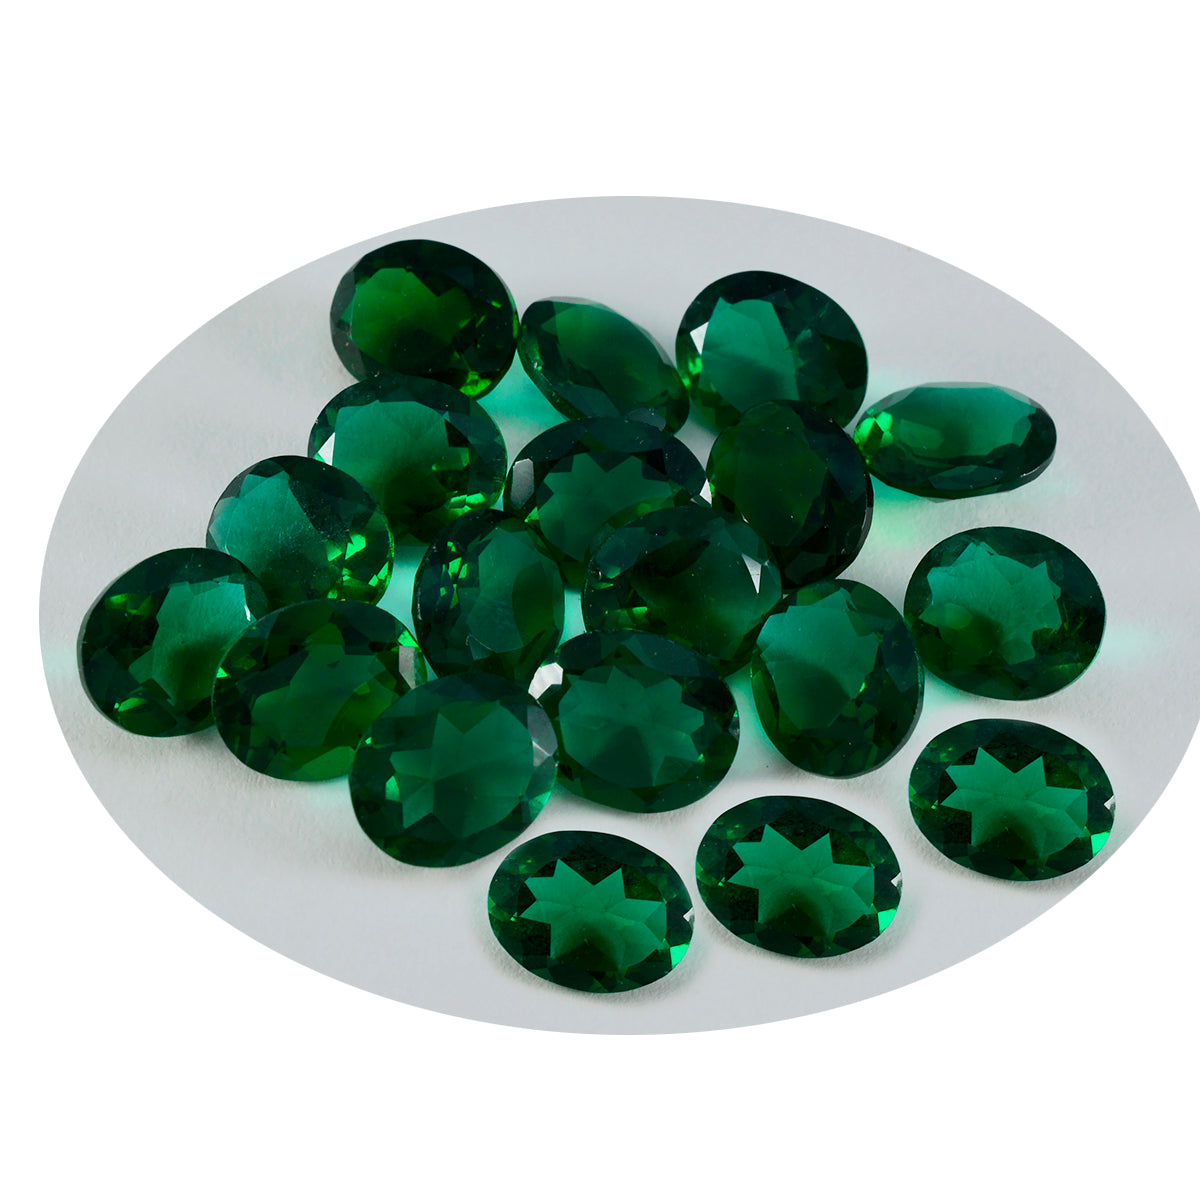 Riyogems 1 Stück grüner Smaragd, CZ, facettiert, 6 x 8 mm, ovale Form, hübscher, hochwertiger, loser Edelstein